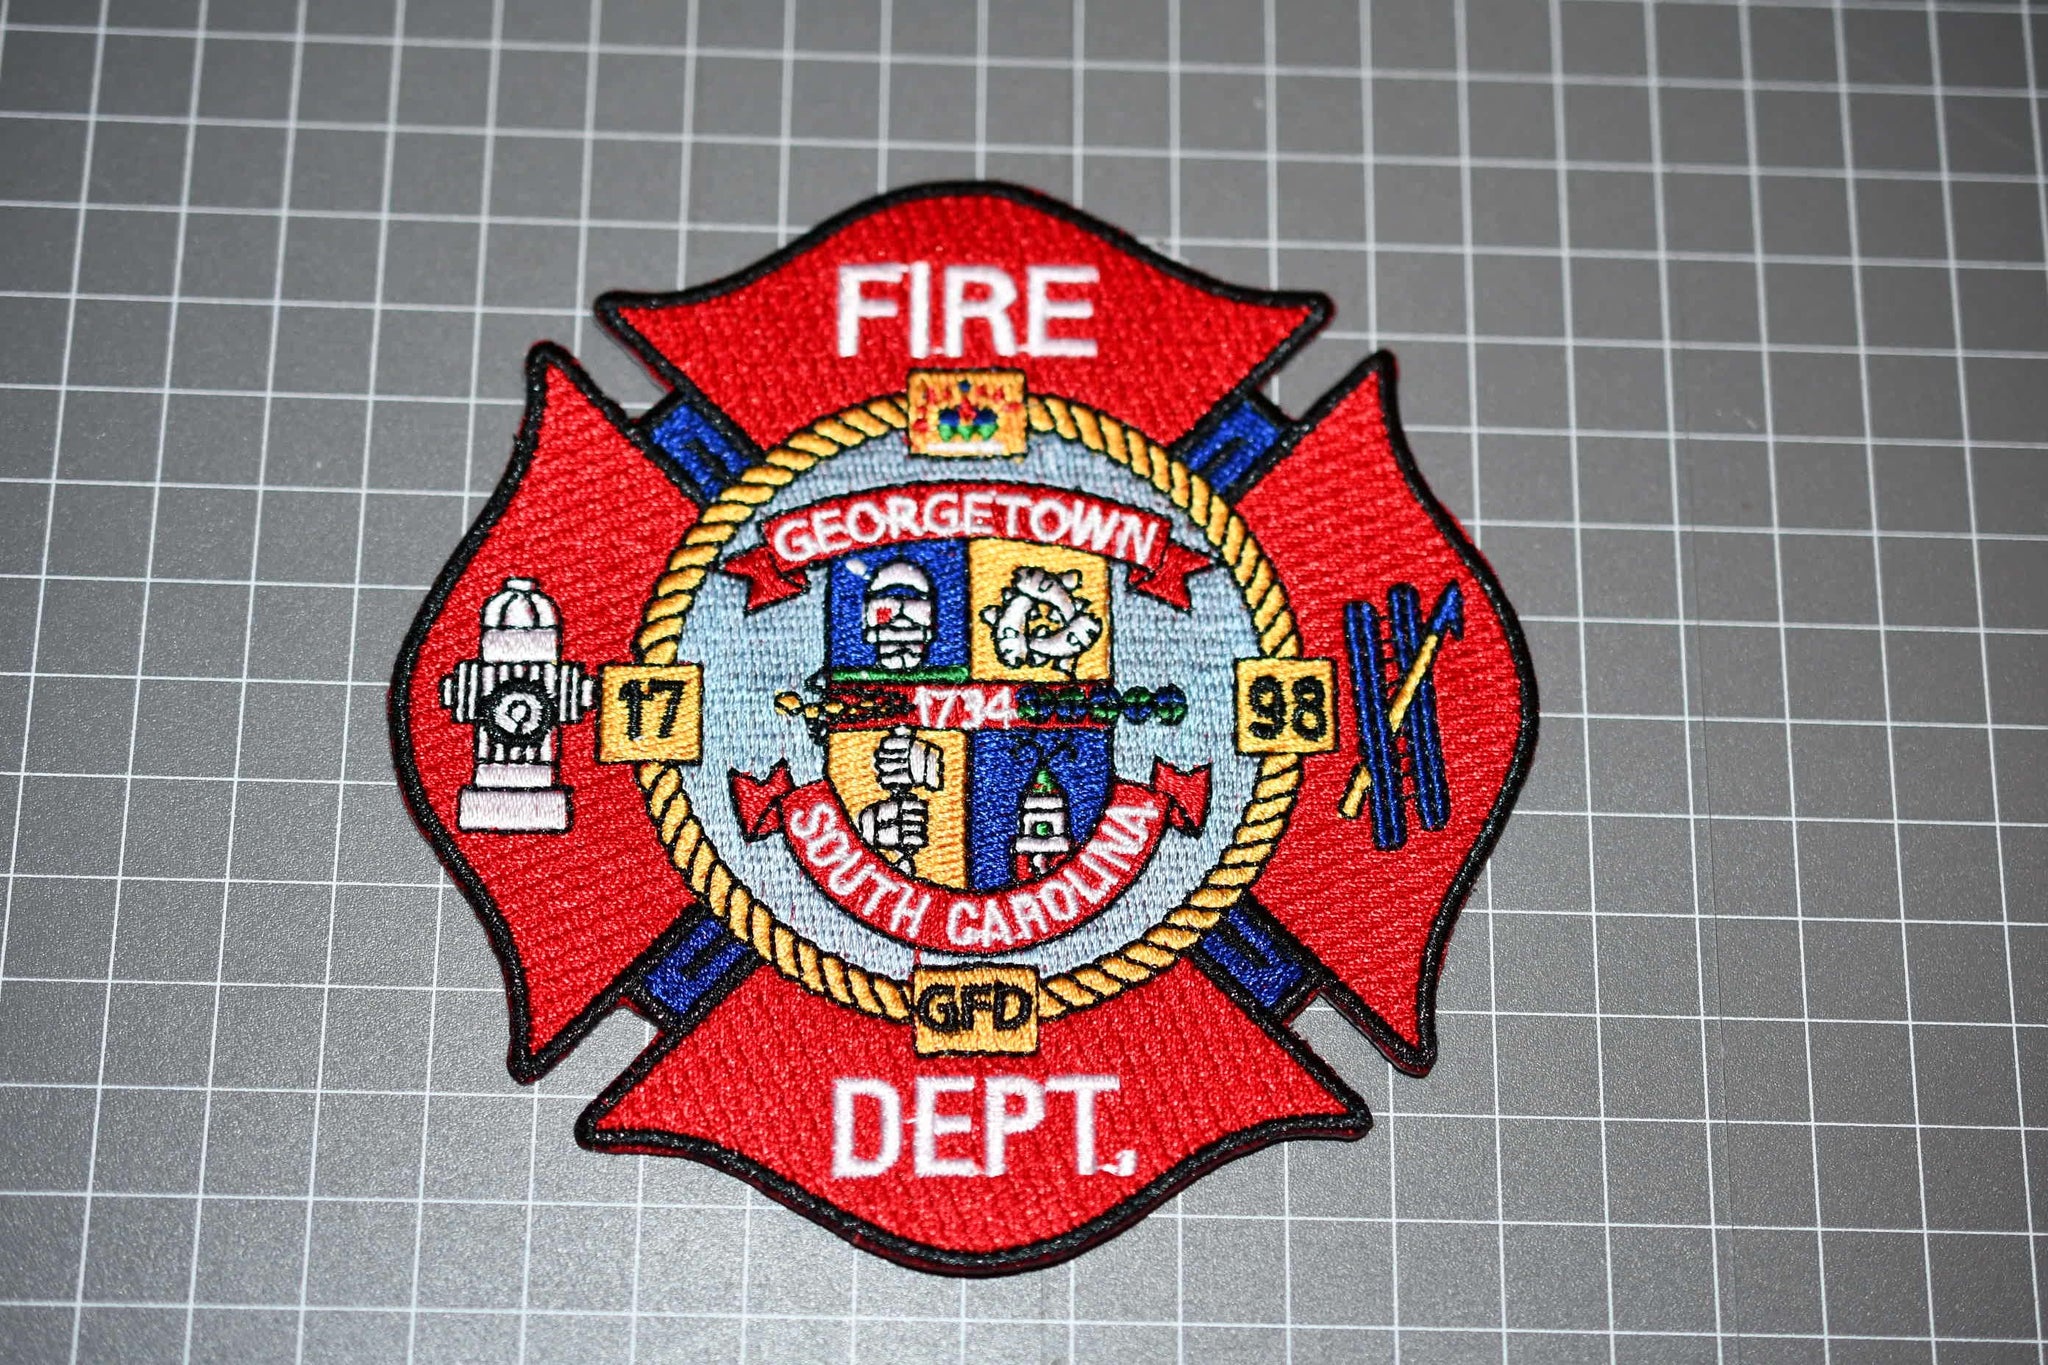 Georgetown South Carolina Fire Department Patch (B2)